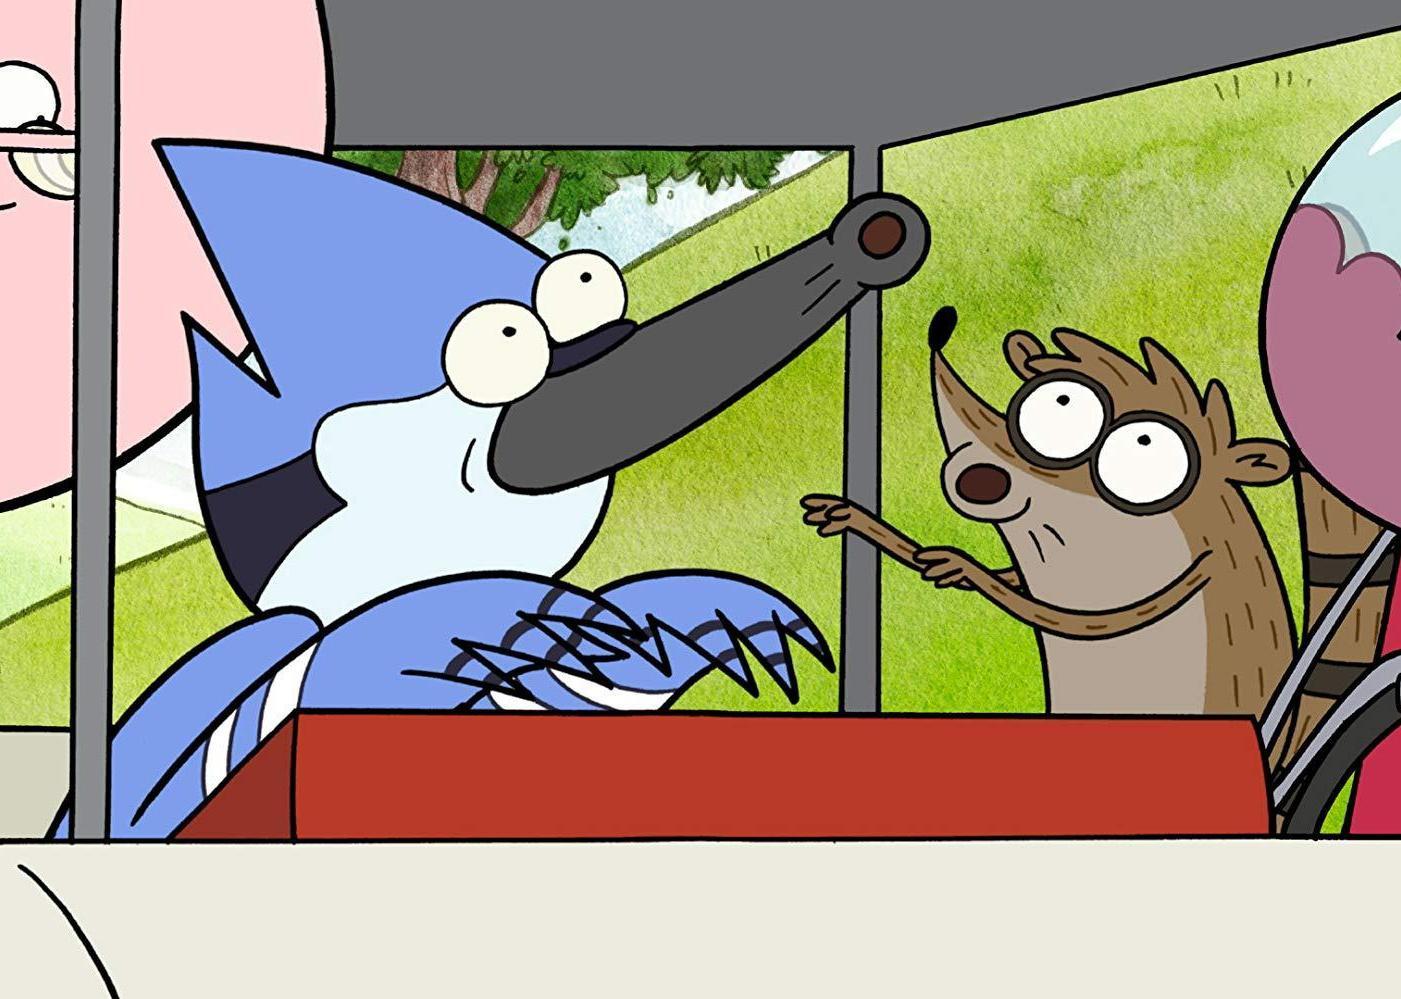 An animated still from ‘Regular Show’.